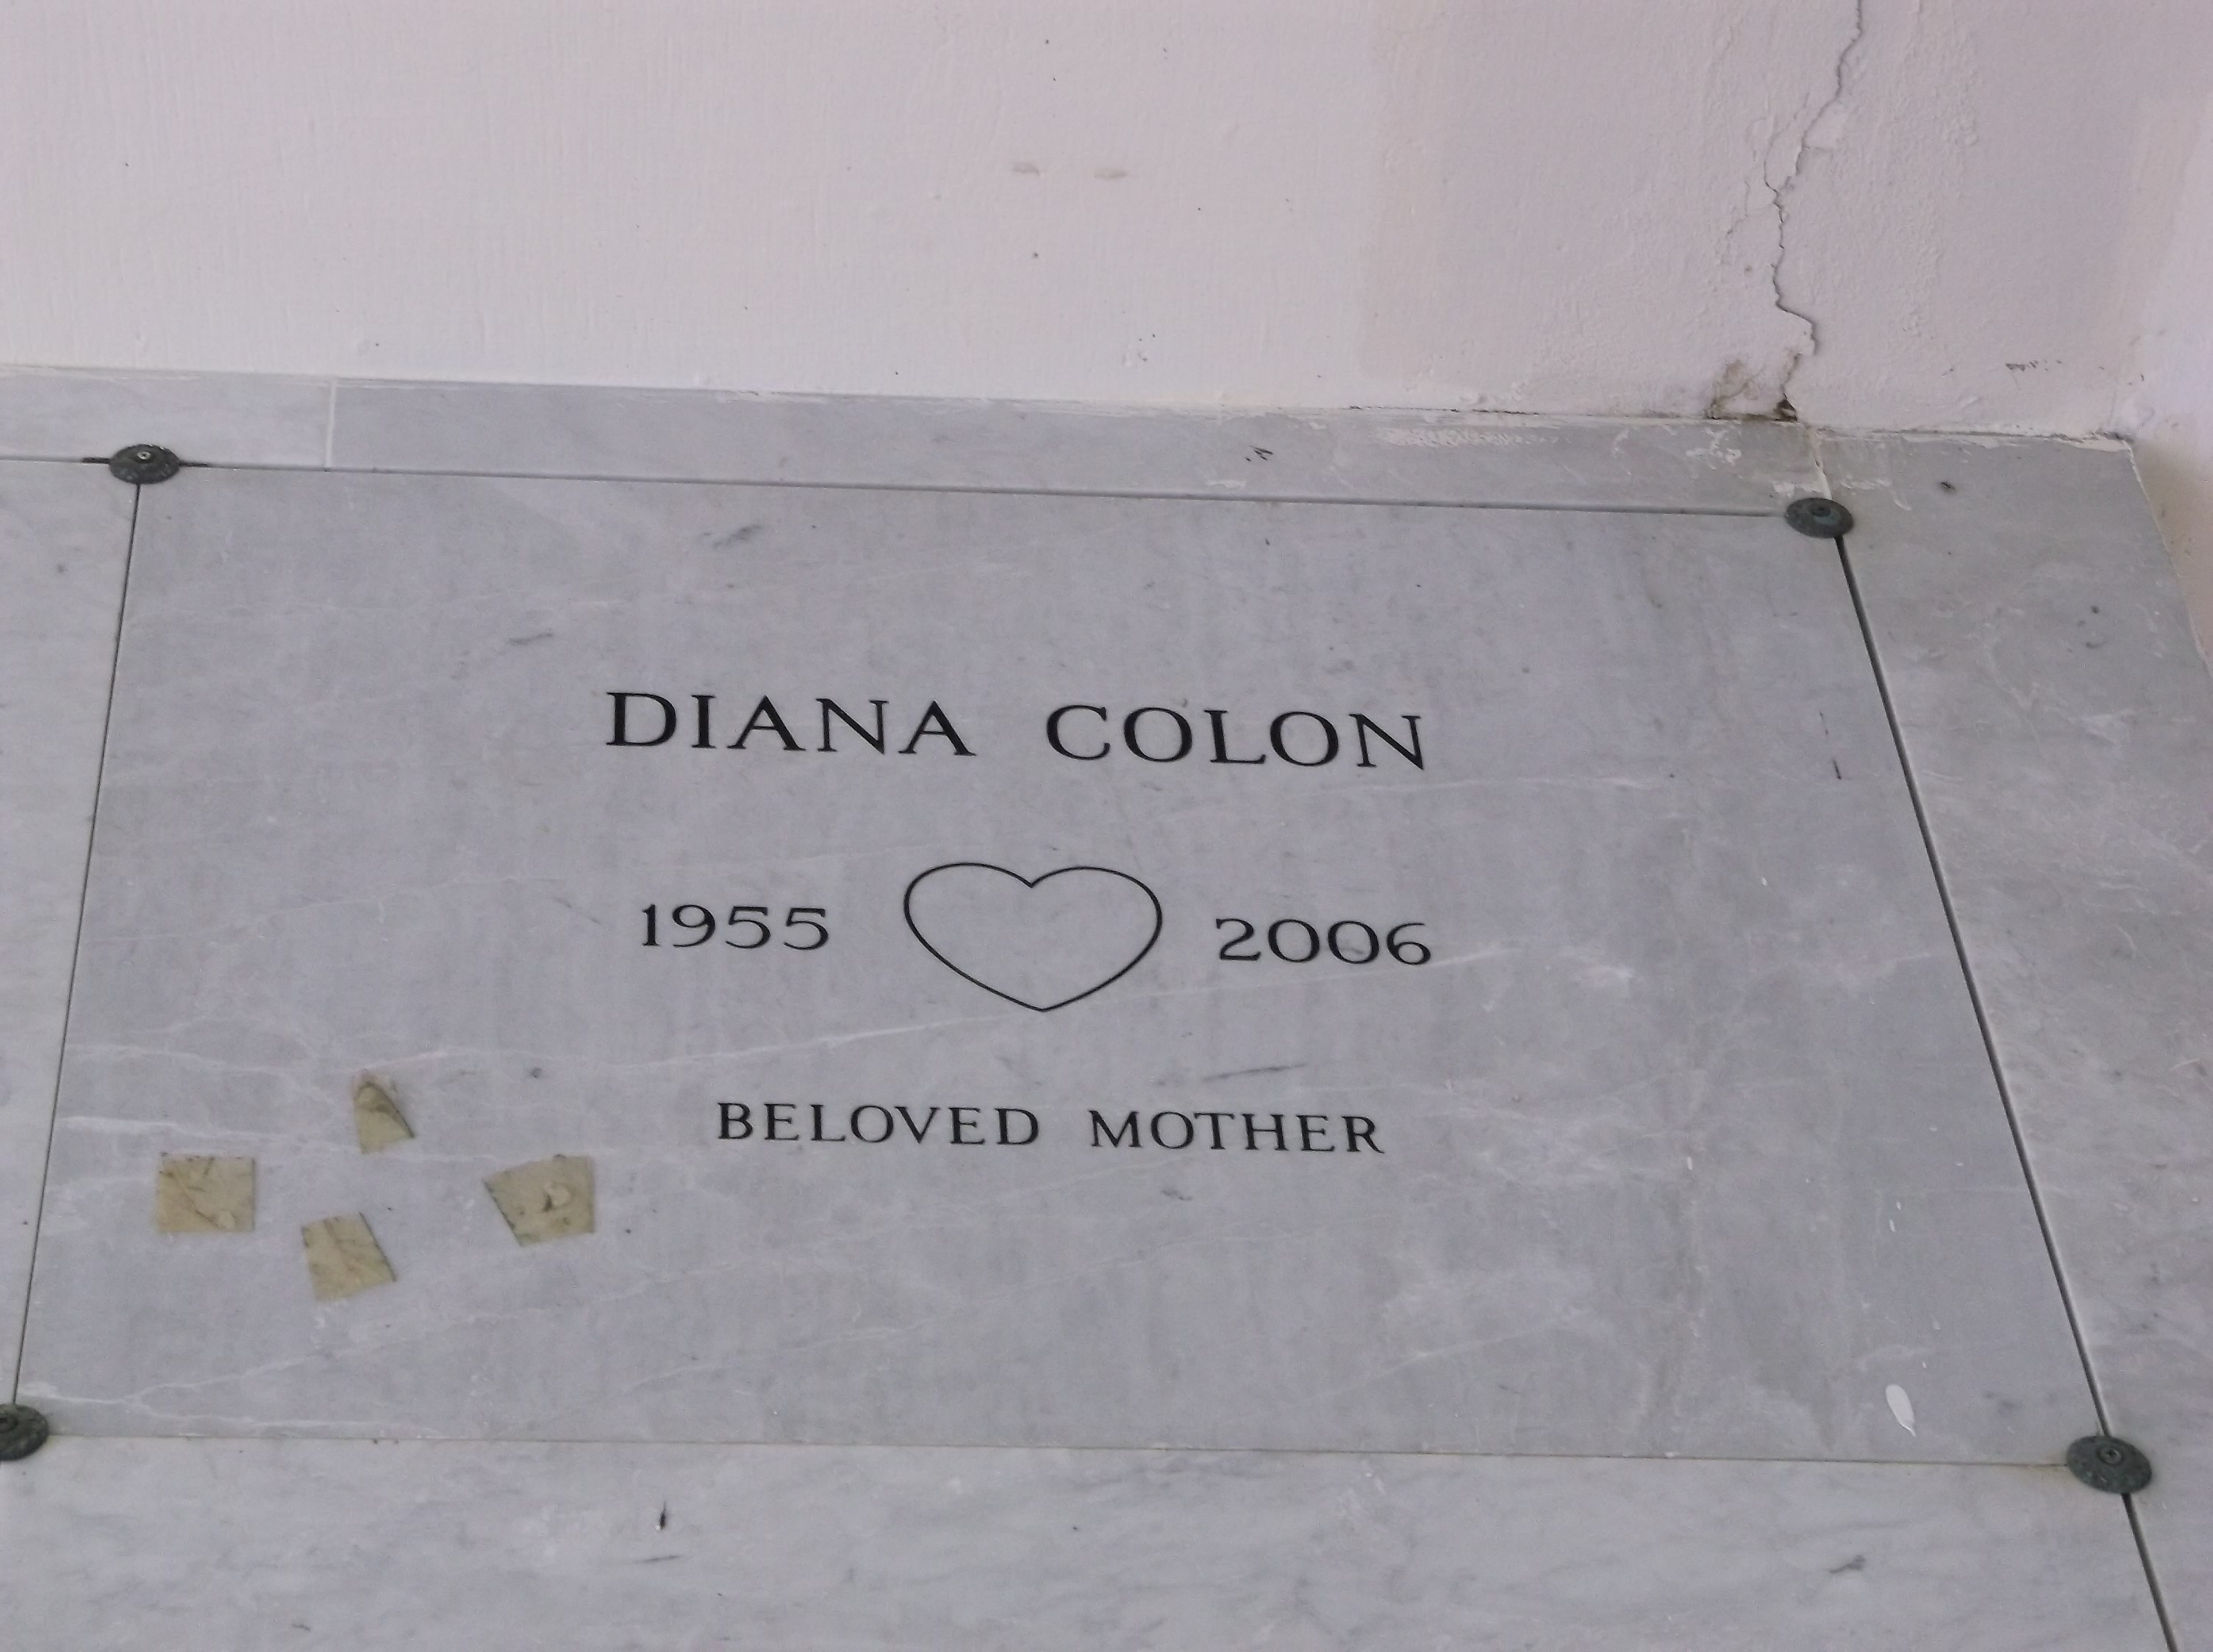 Diana Colon